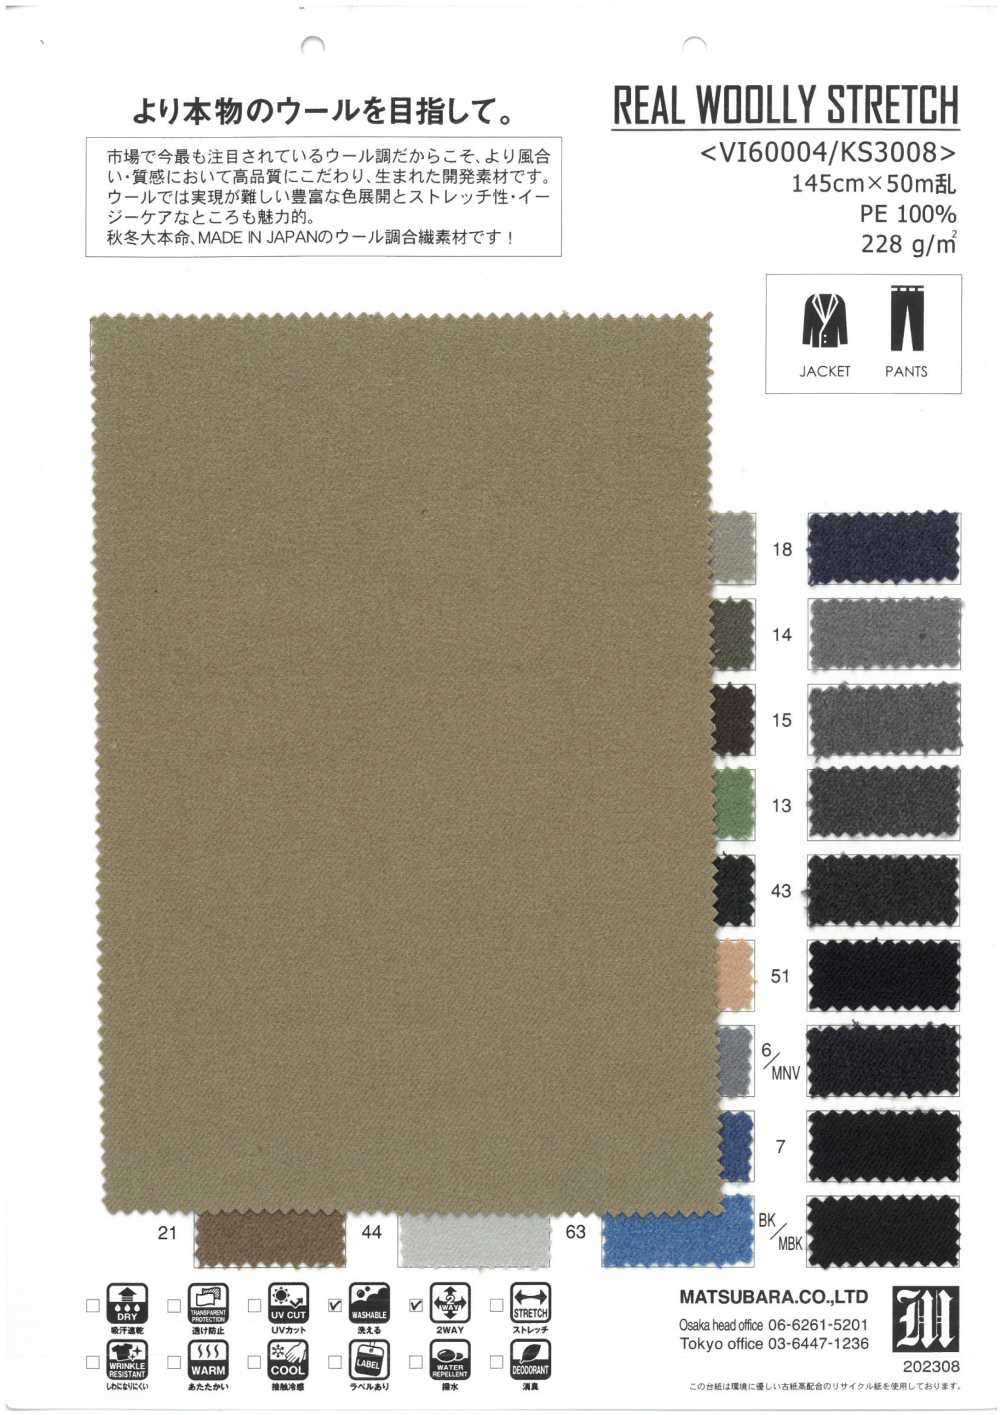 VI60004 REAL WOOLLY STRETCH[Textile / Fabric] Matsubara